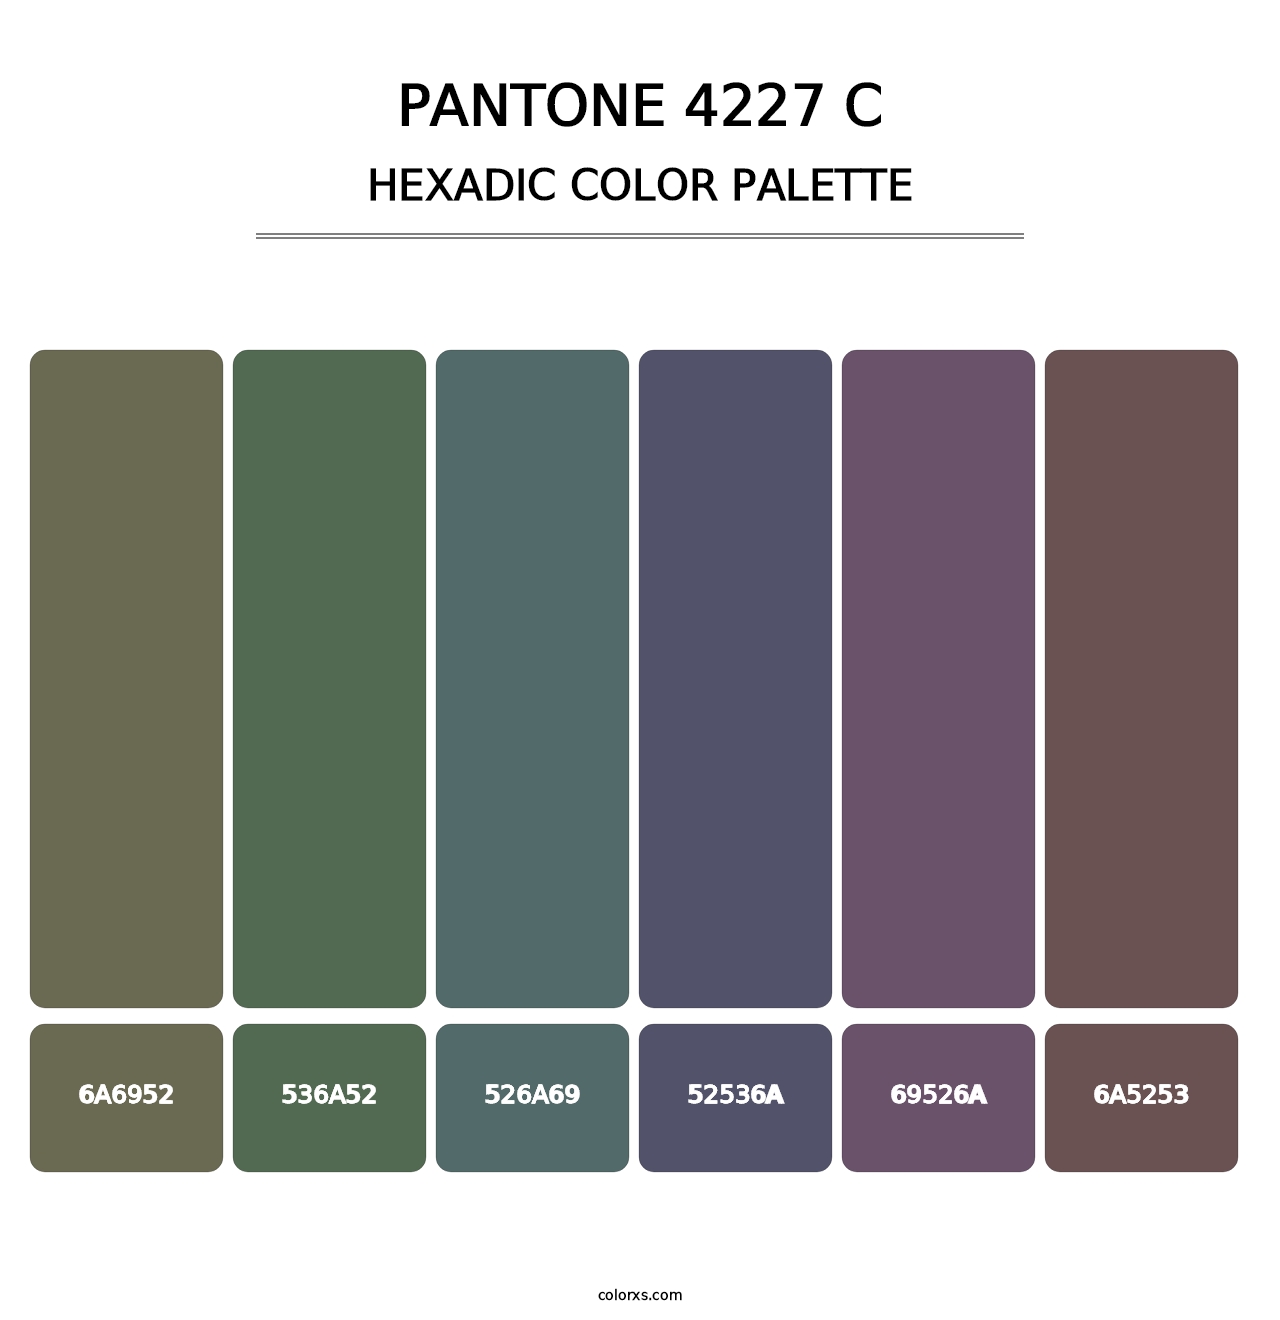 PANTONE 4227 C - Hexadic Color Palette